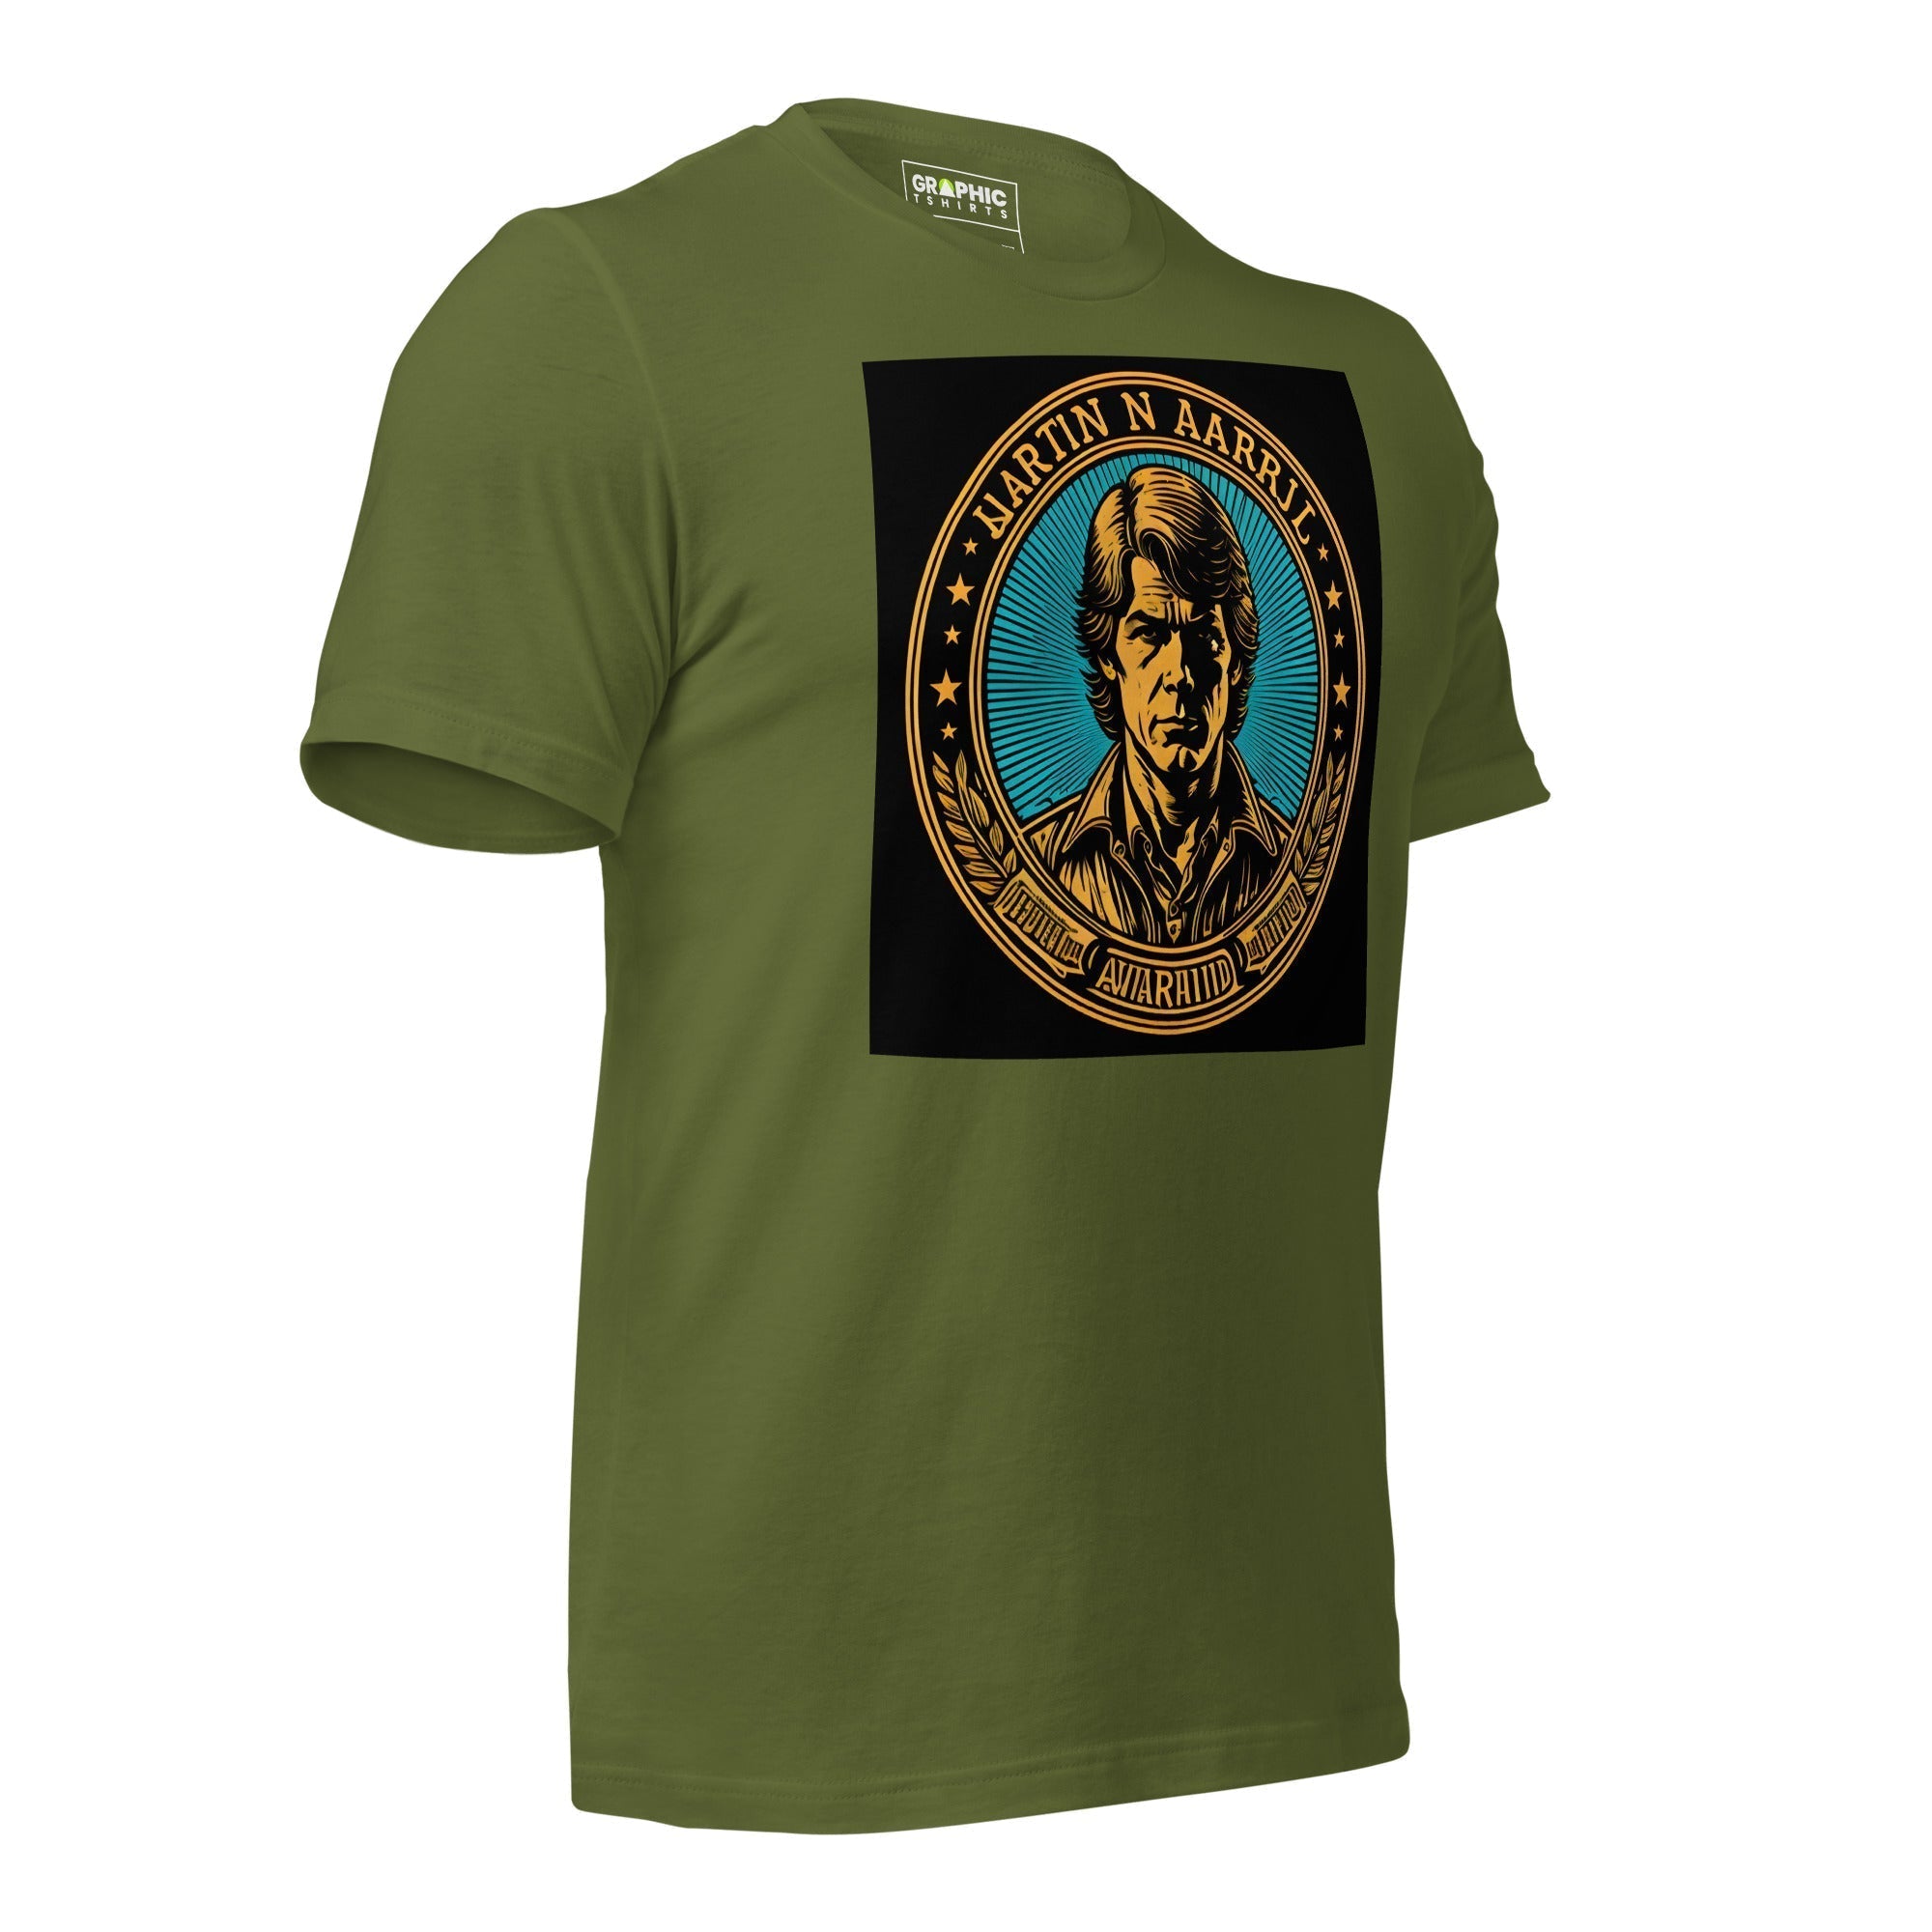 Unisex Crew Neck T-Shirt - American Vagabond Series v.1 - GRAPHIC T-SHIRTS